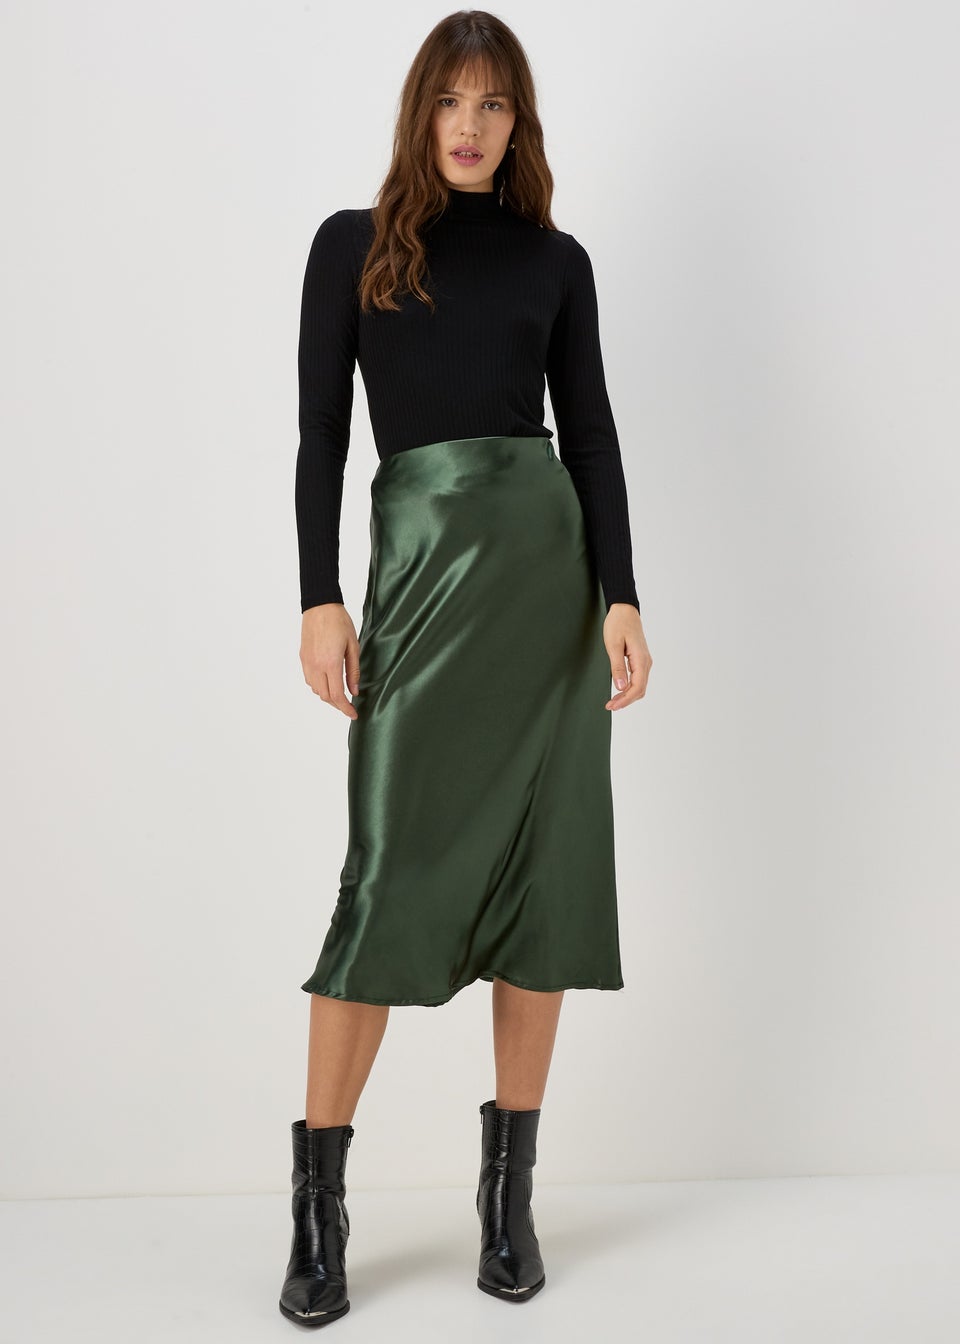 Green Satin Midi Skirt